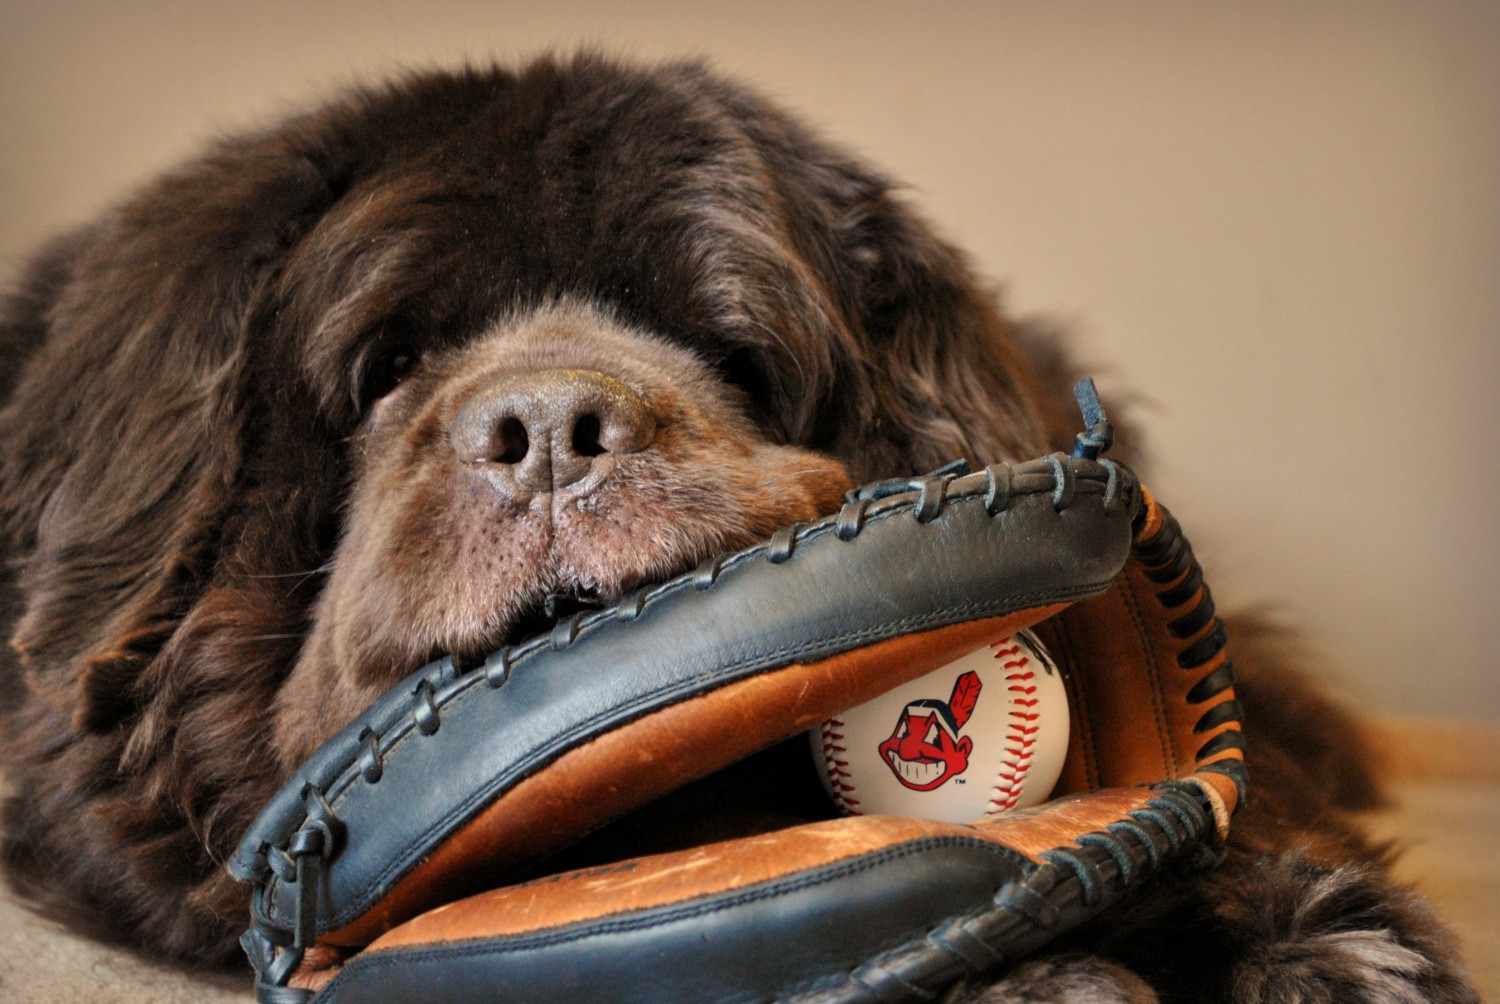 Dog-Friendly Major League Baseball Games in 2022